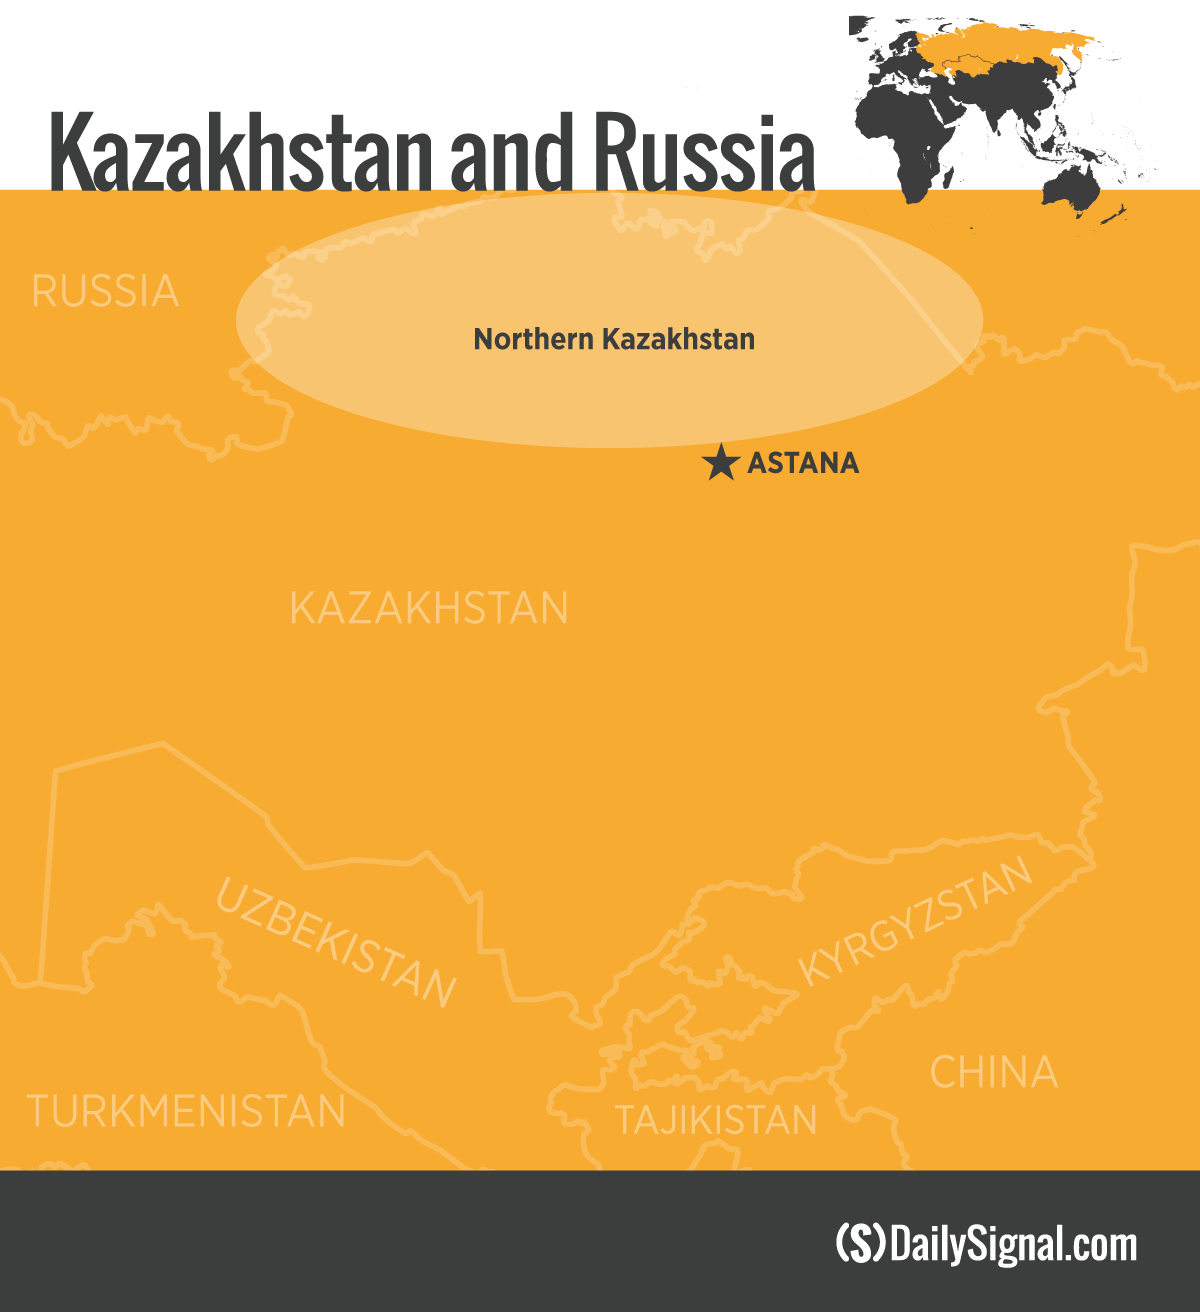 160919_russia-maps_kazakhstan_v2